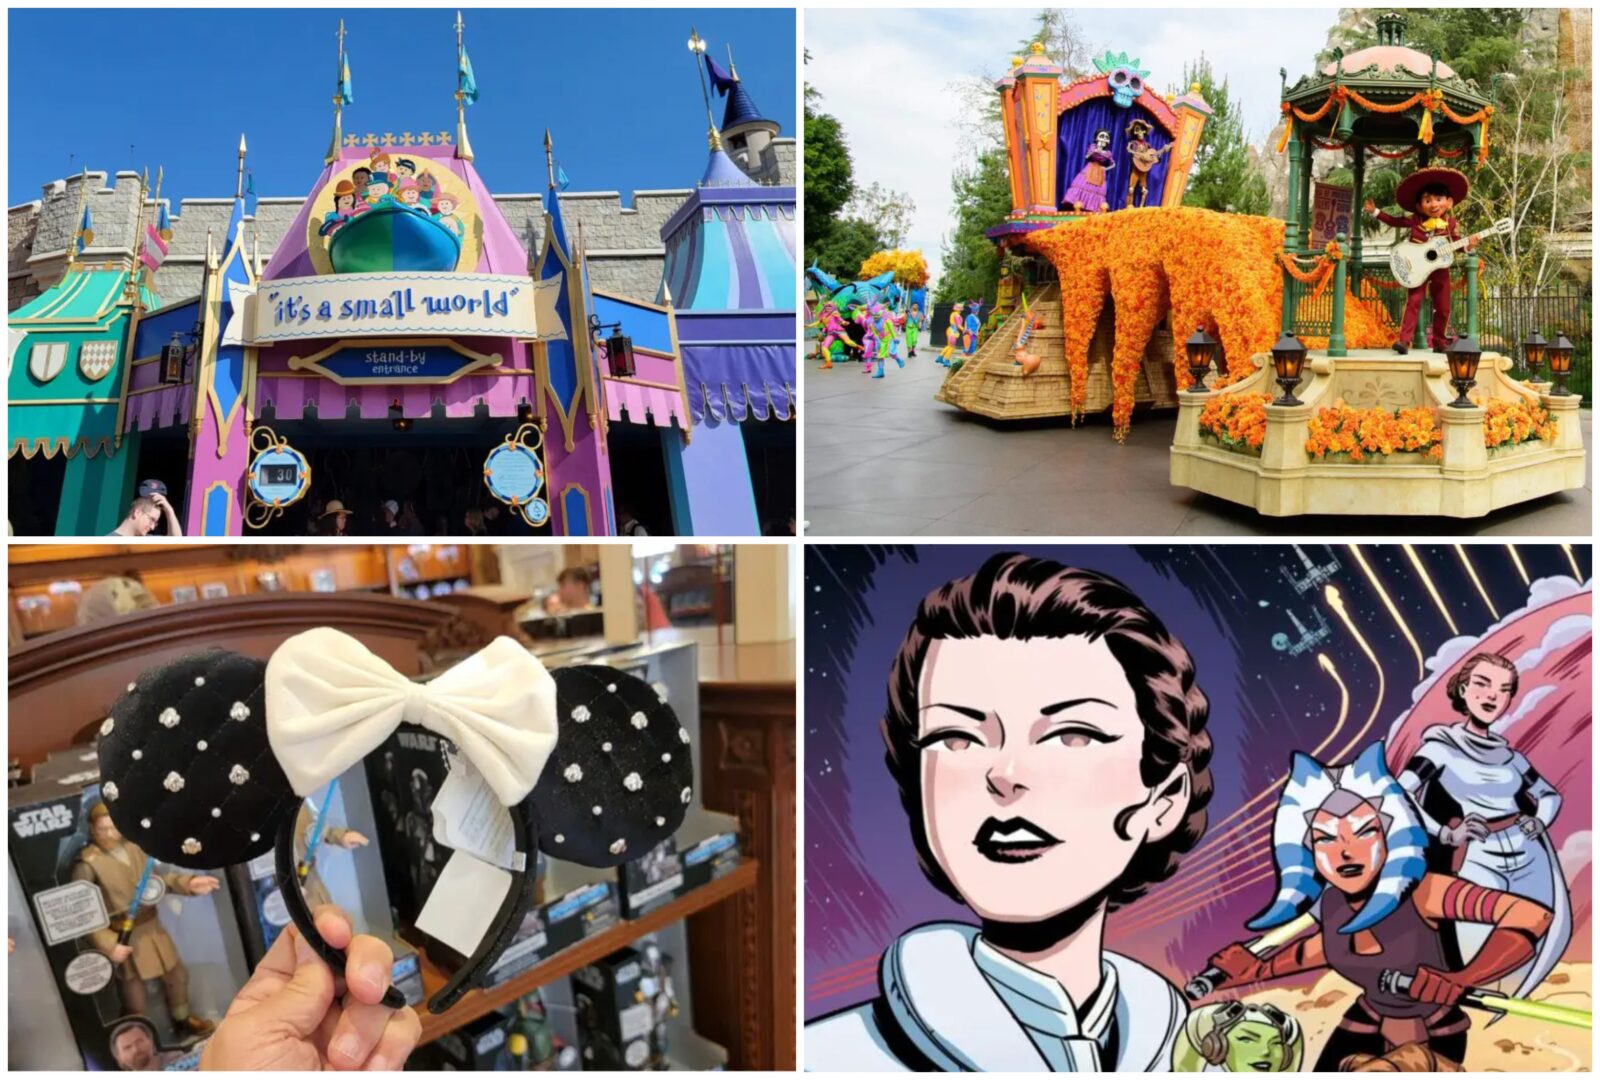 Disney News Highlights: New Resorts near Disney World, “it’s a small world” Adds New Doll, Eggstravaganza Returning to Disneyland, How Women Create Magic and Innovation at Disney